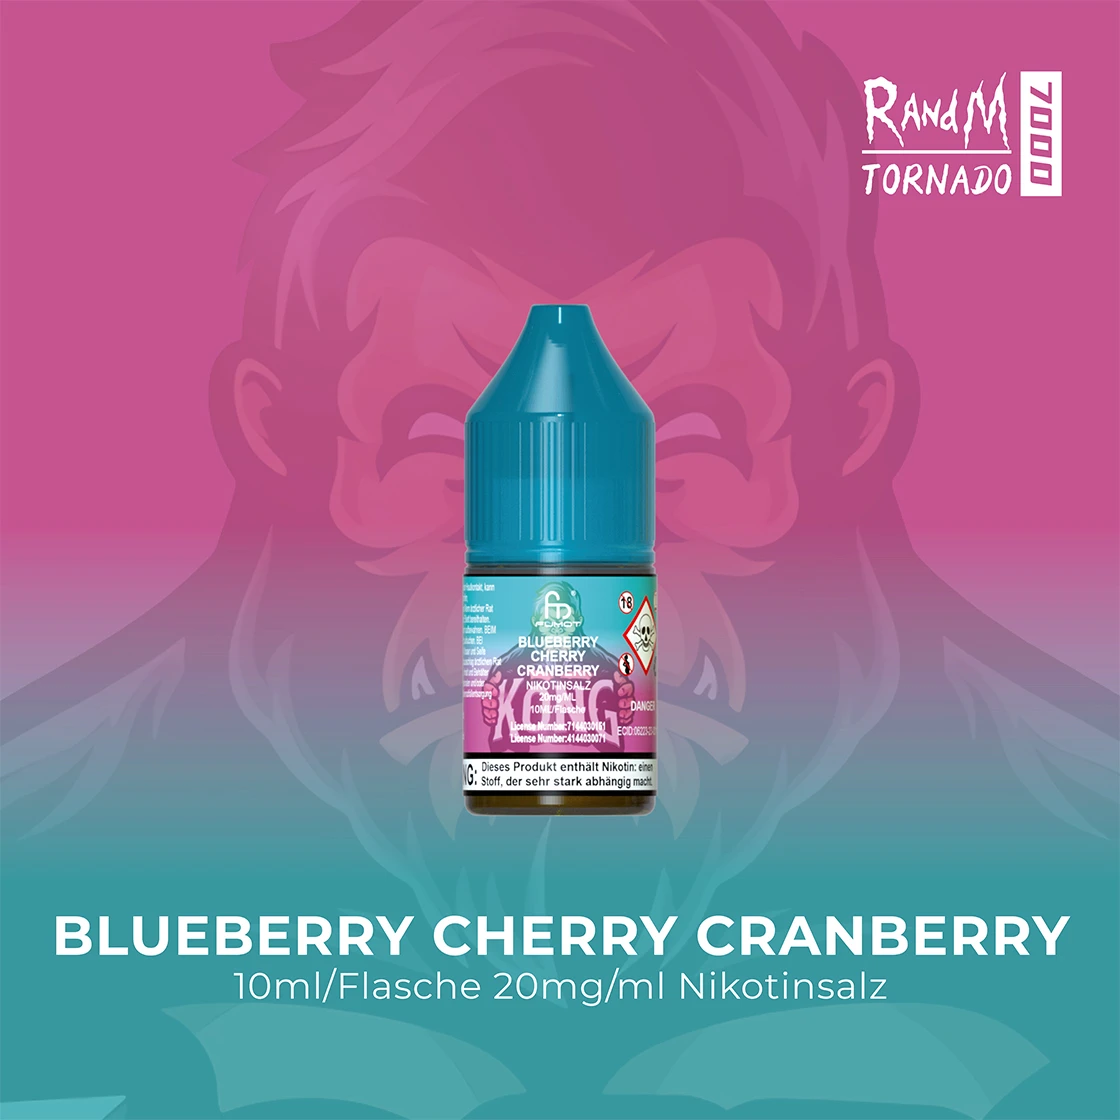 RandM Tornado 7000 Blue Cherry Cranberry E-Liquid Nikotinsalz 20 mg | Vape Liquids 1